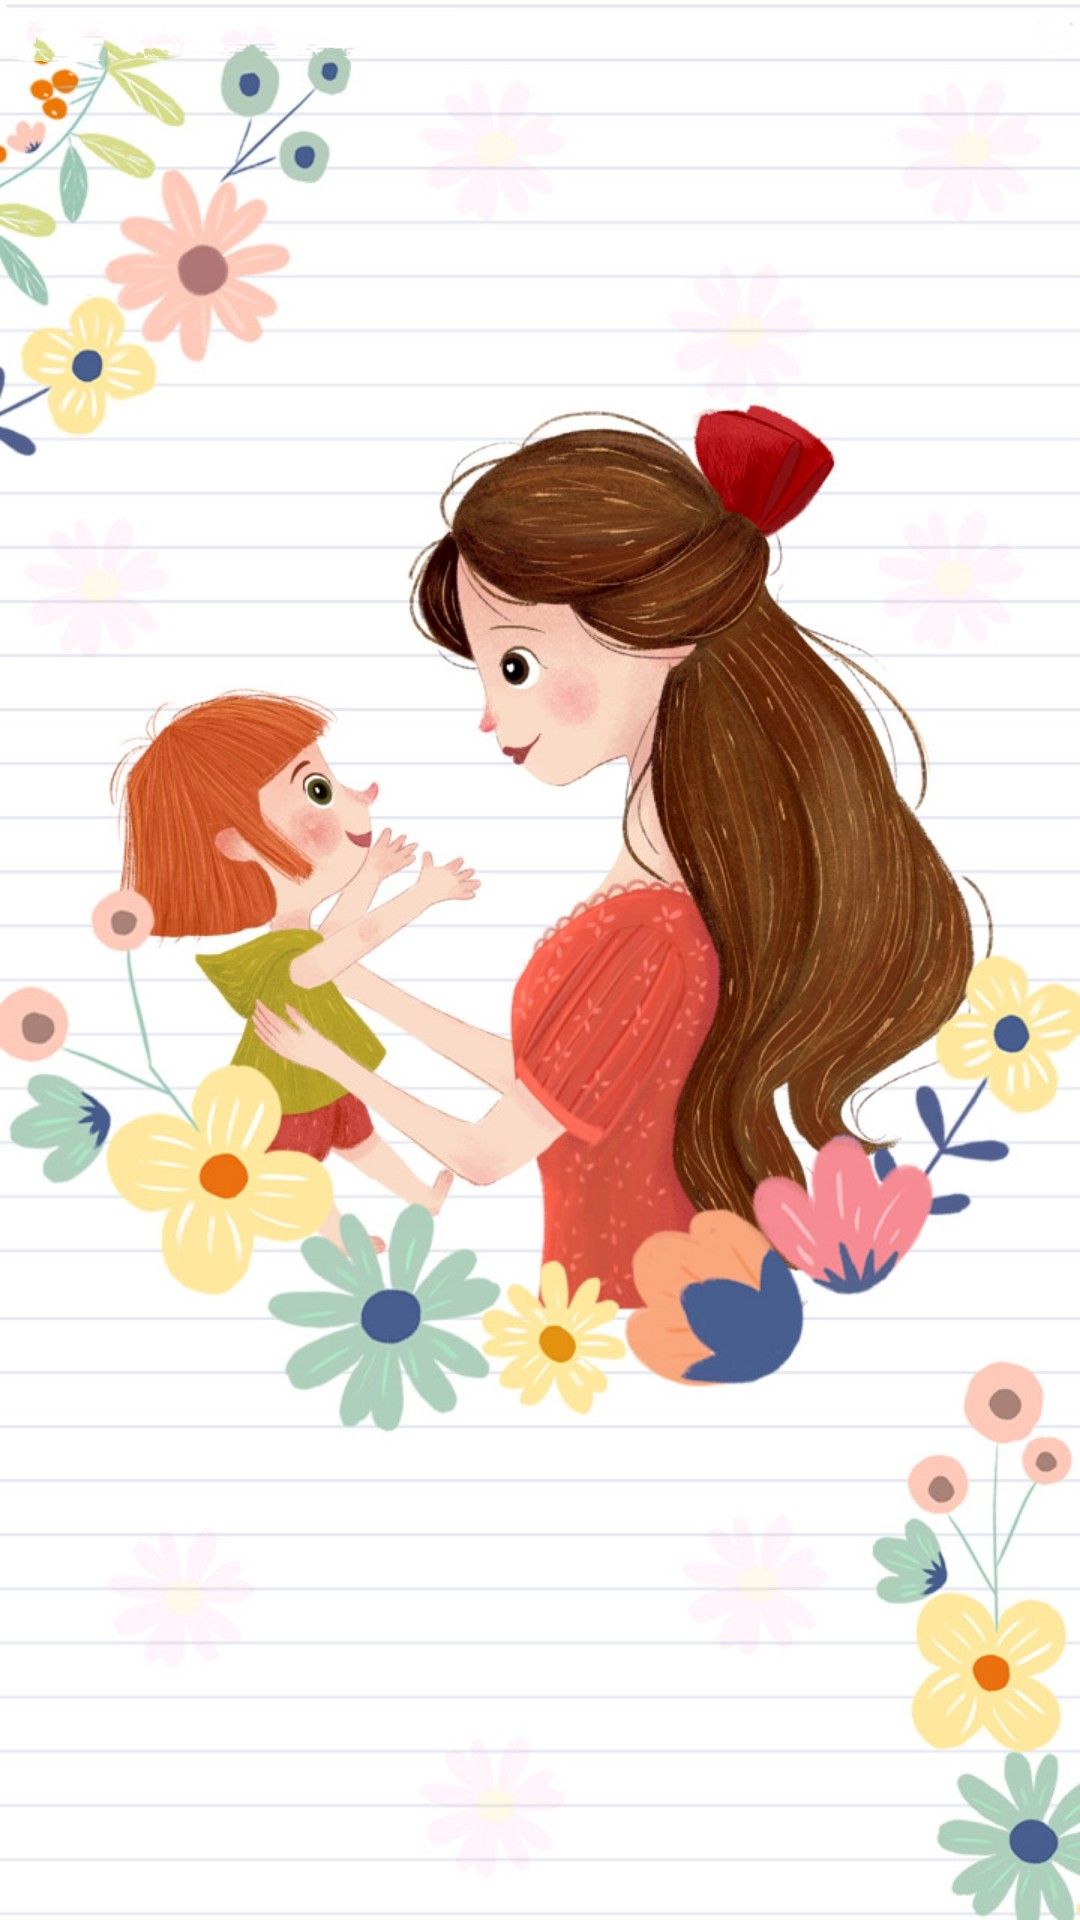 Vẽ tranh tặng mẹ đơn giản Tranh vẽ 83 How to draw happy womens day easy YouTube